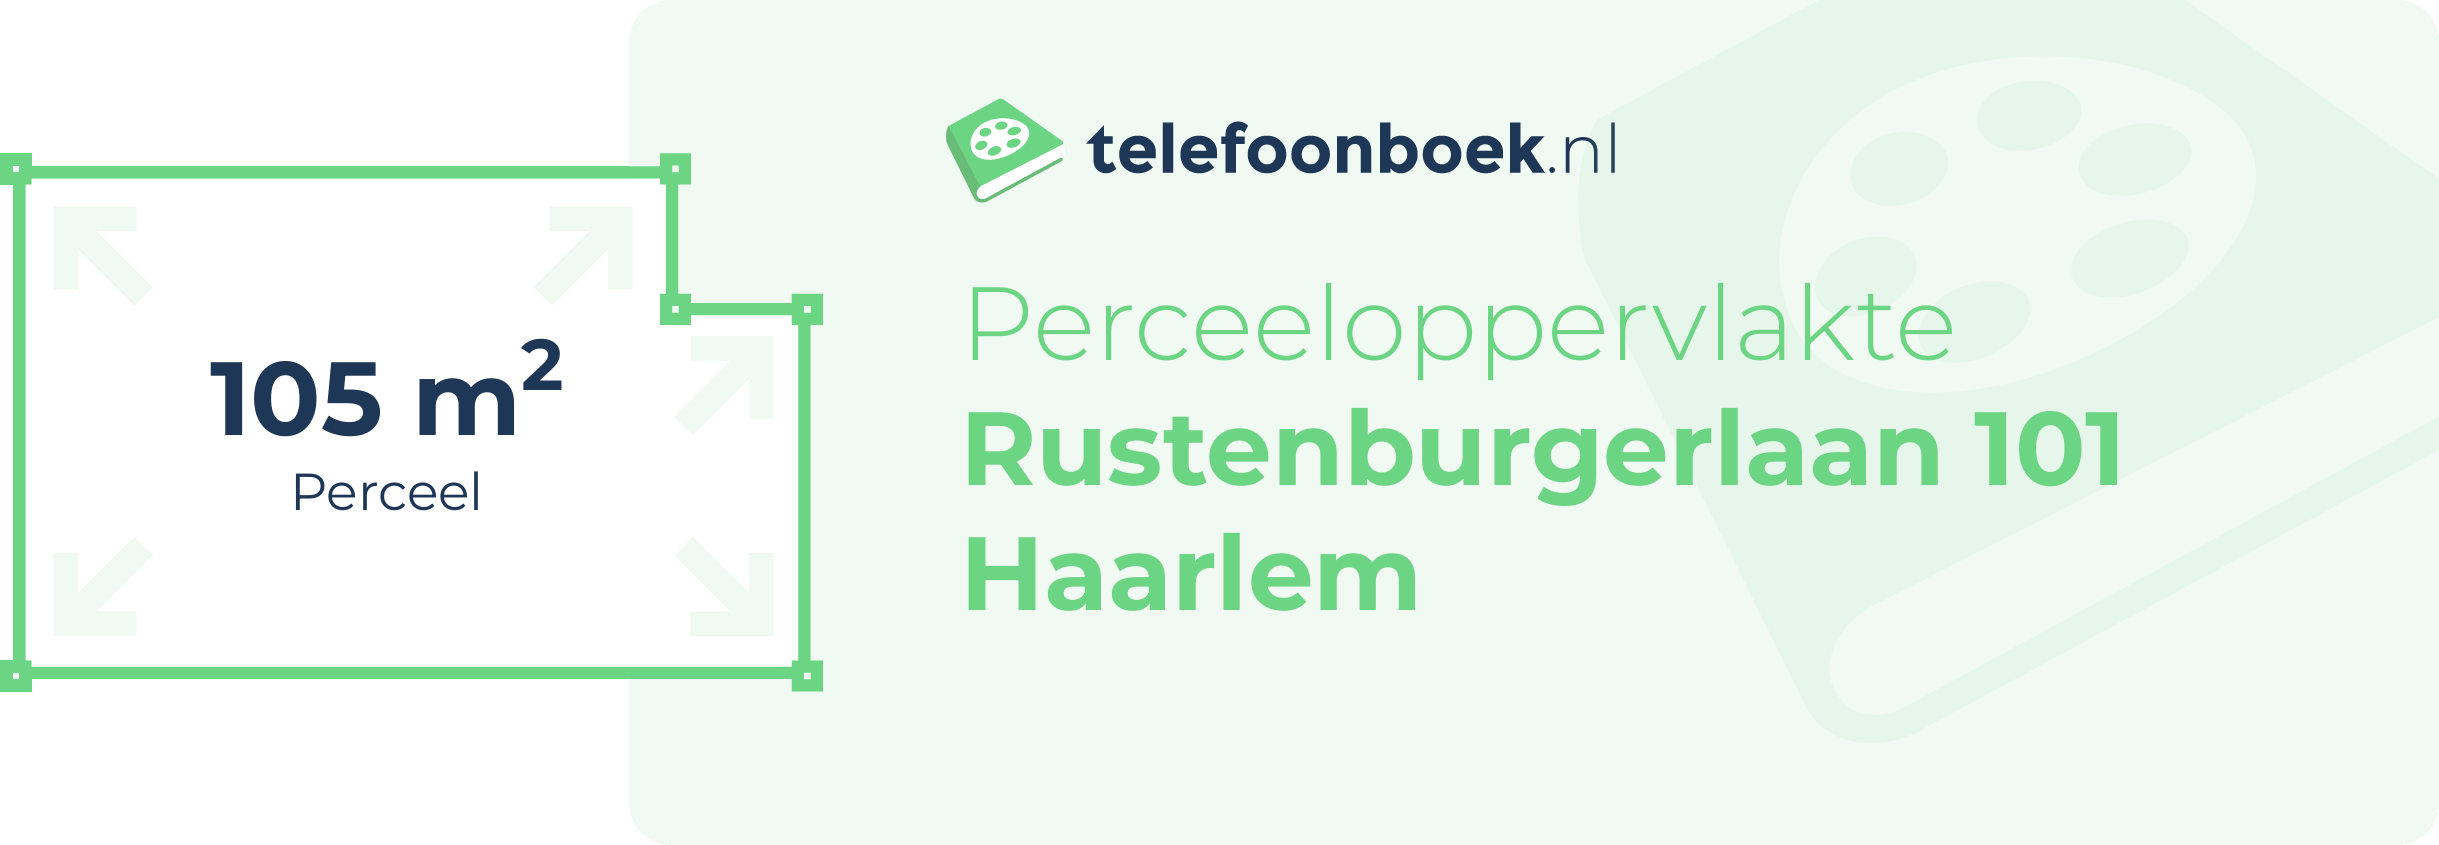 Perceeloppervlakte Rustenburgerlaan 101 Haarlem